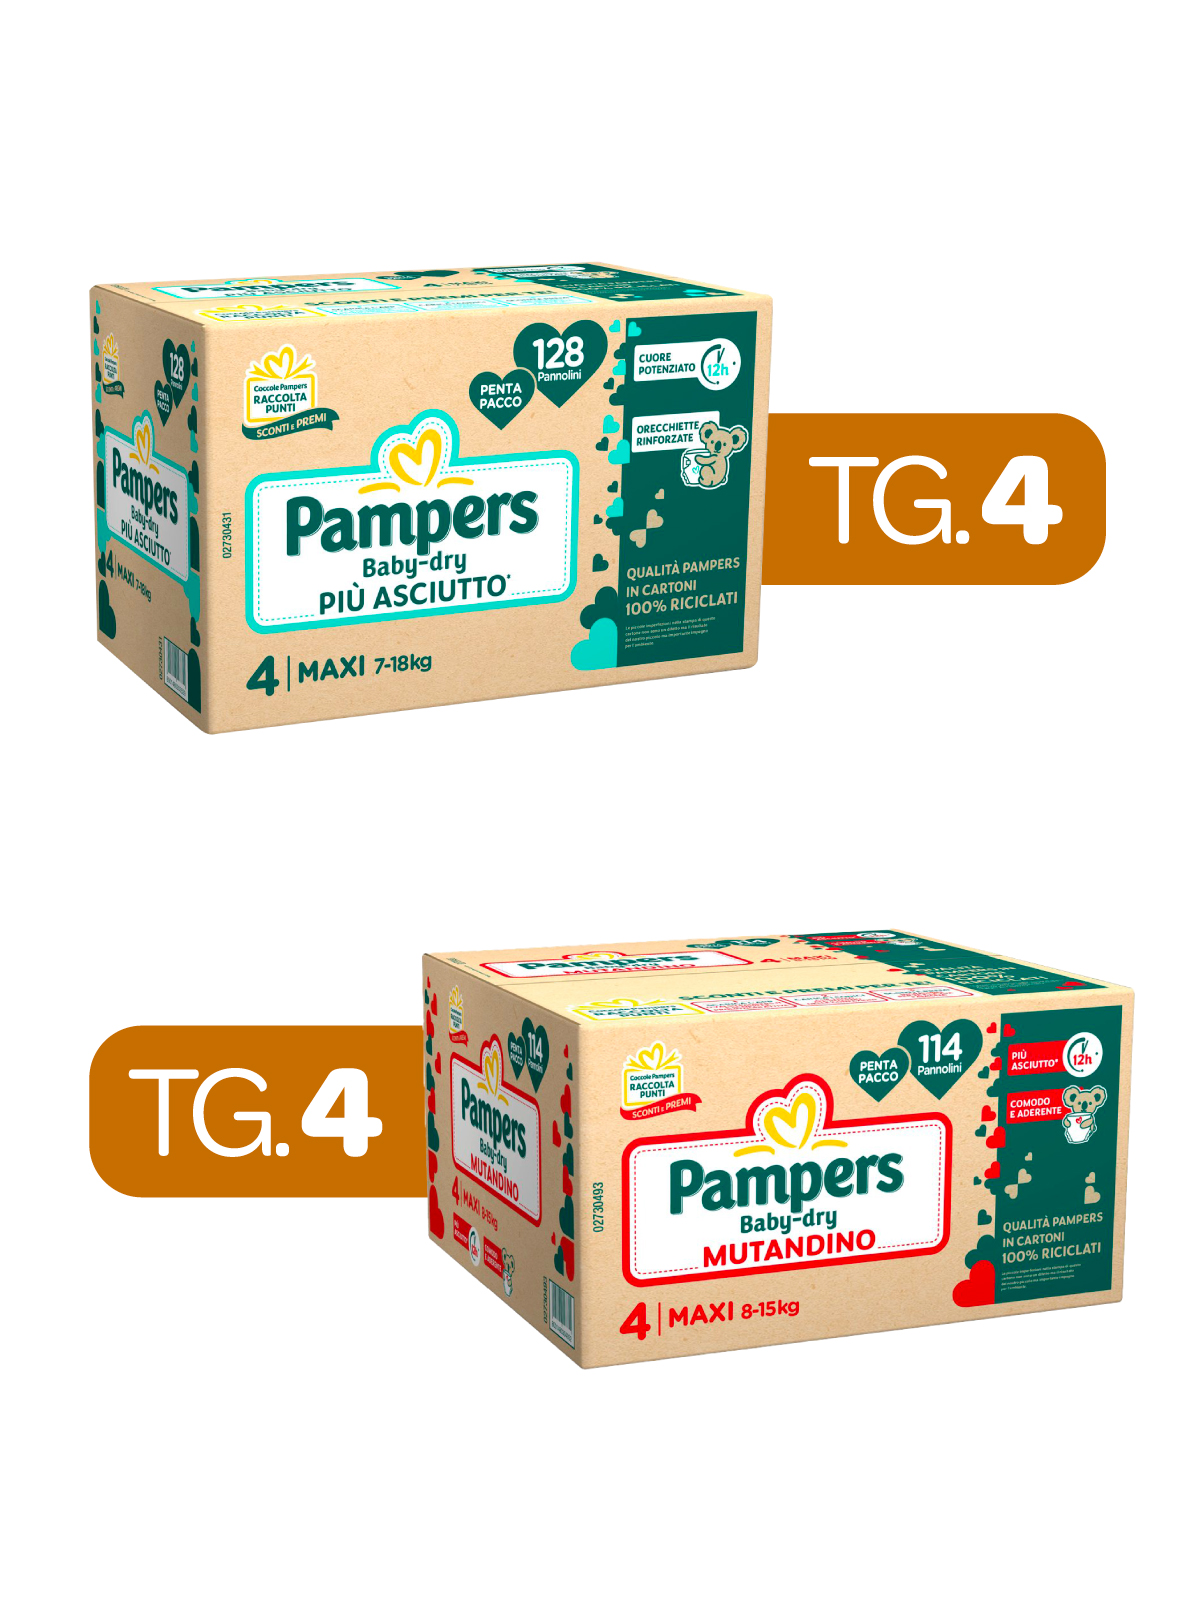 Pampers – baby dry tradizionale tg. 4 x128 pz + mutandino baby dry tg. 4 x114 pz - 